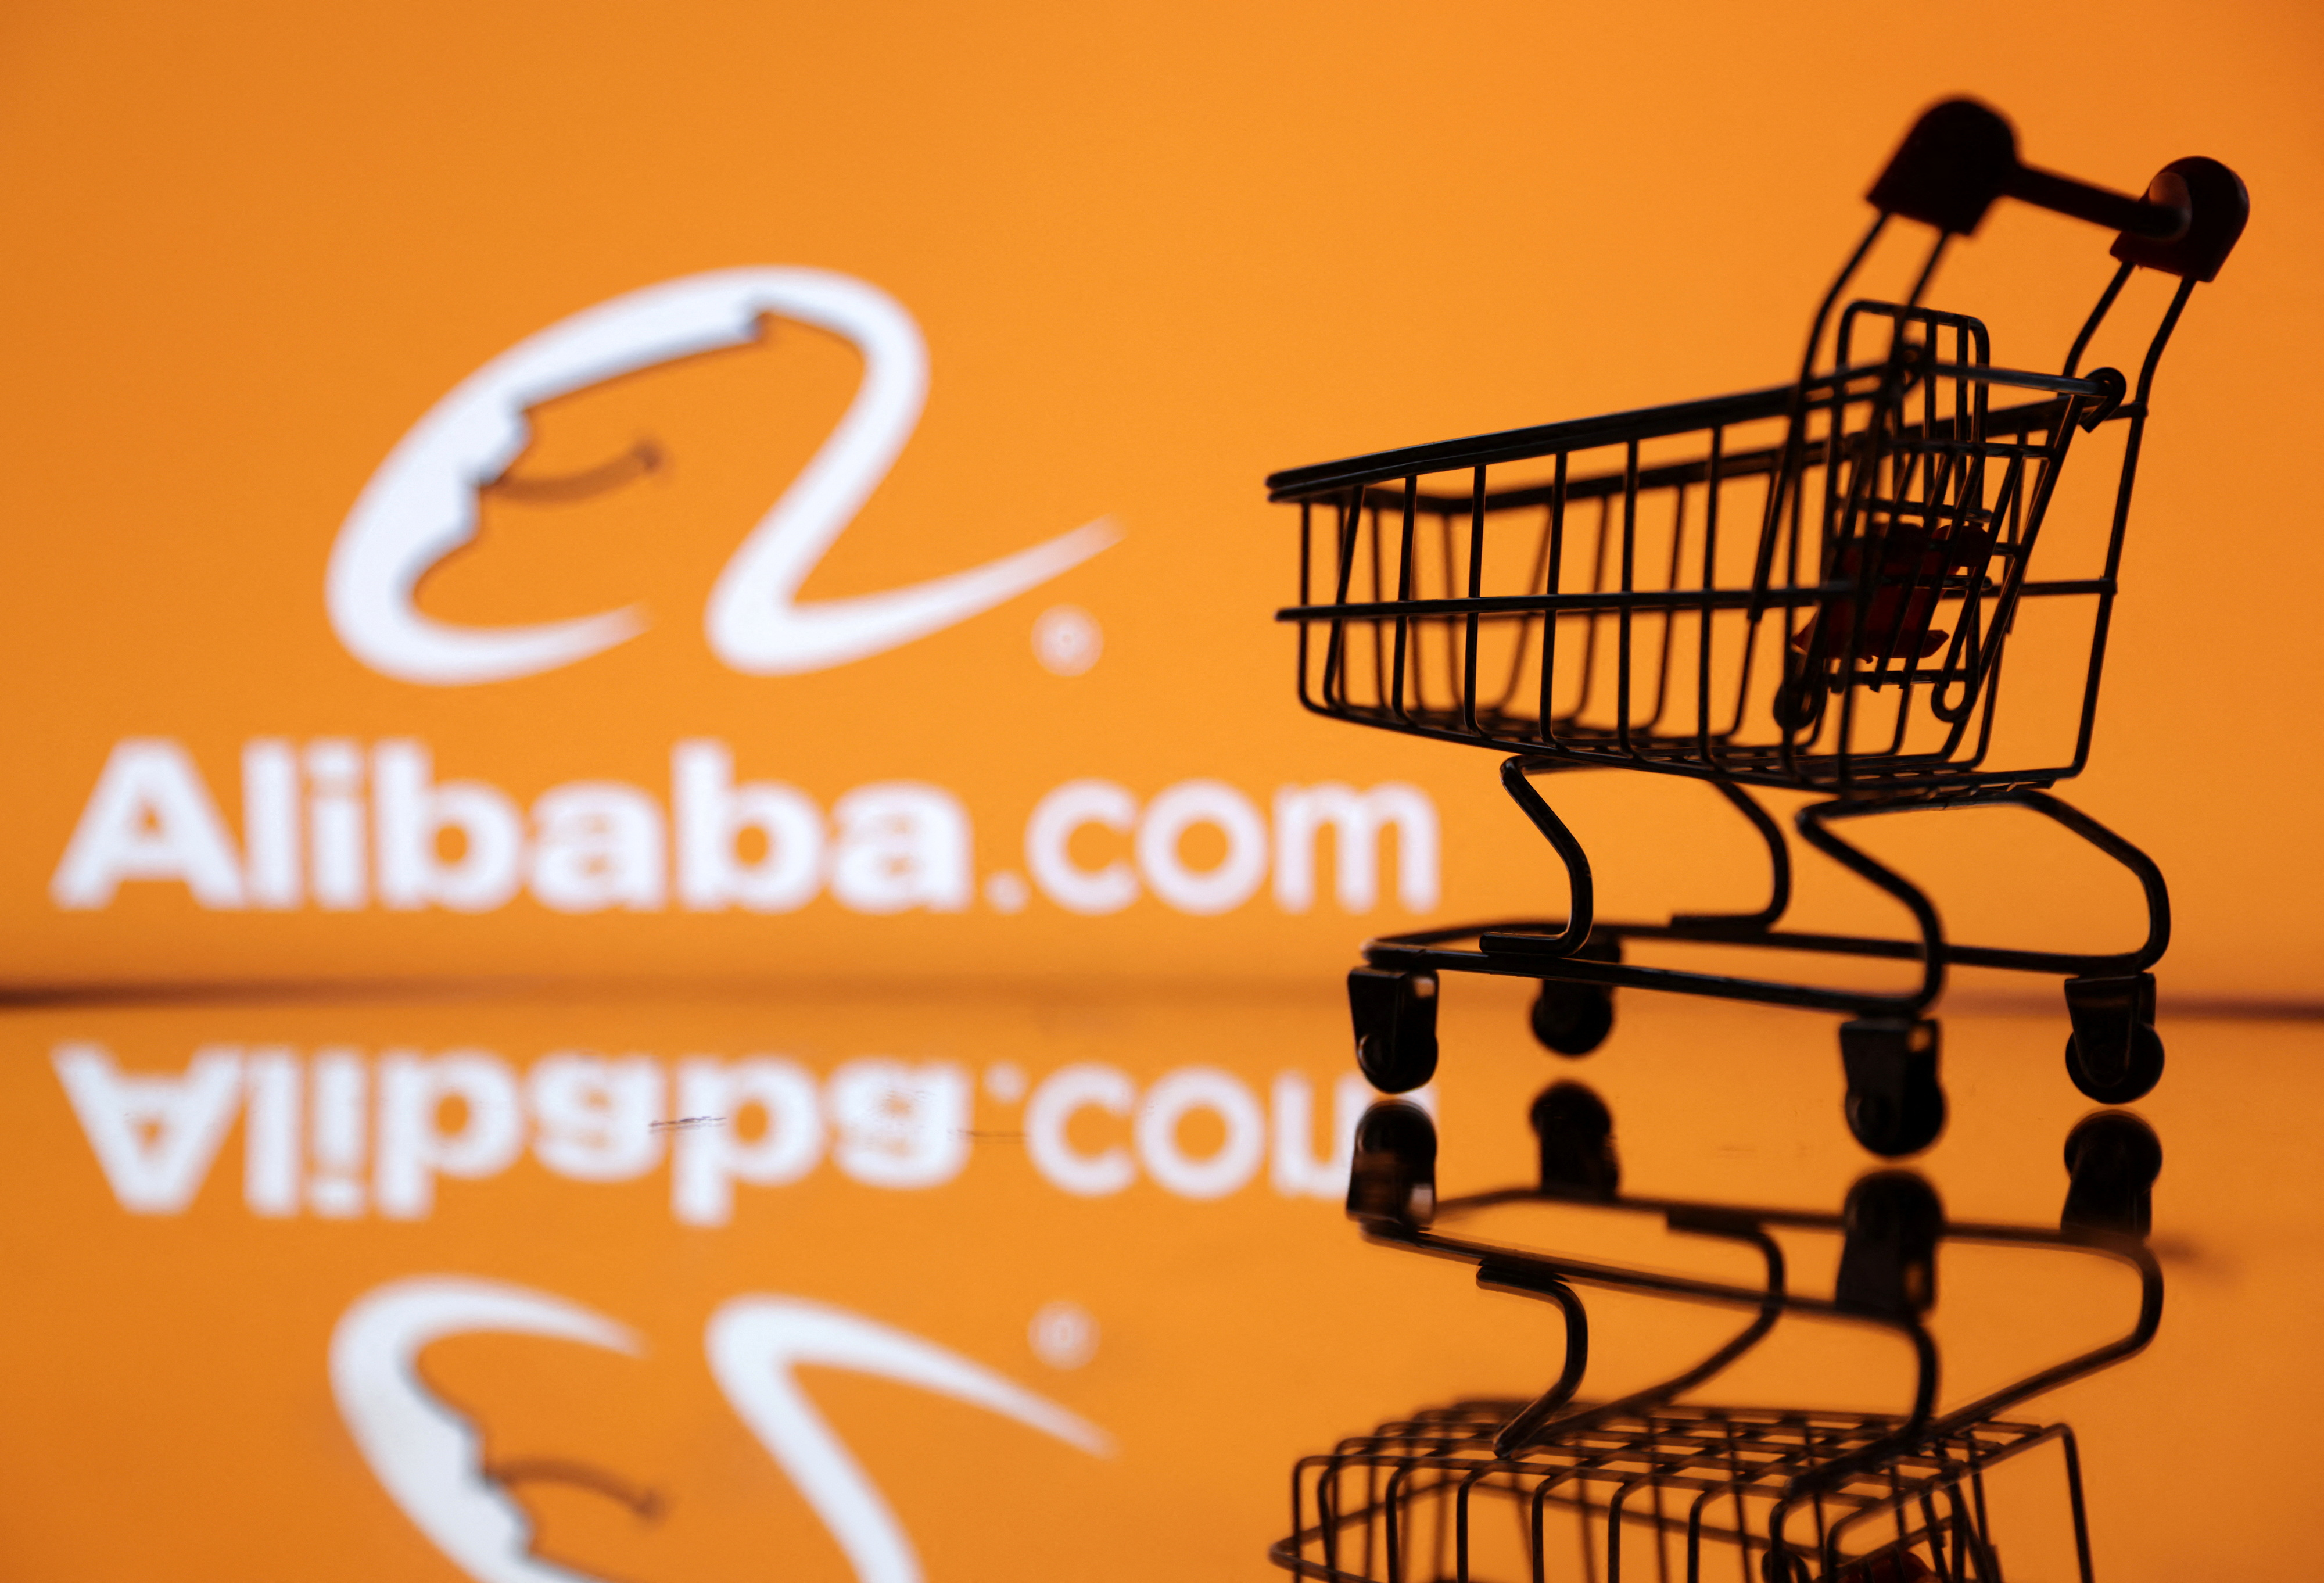 Illustration shows Alibaba logo